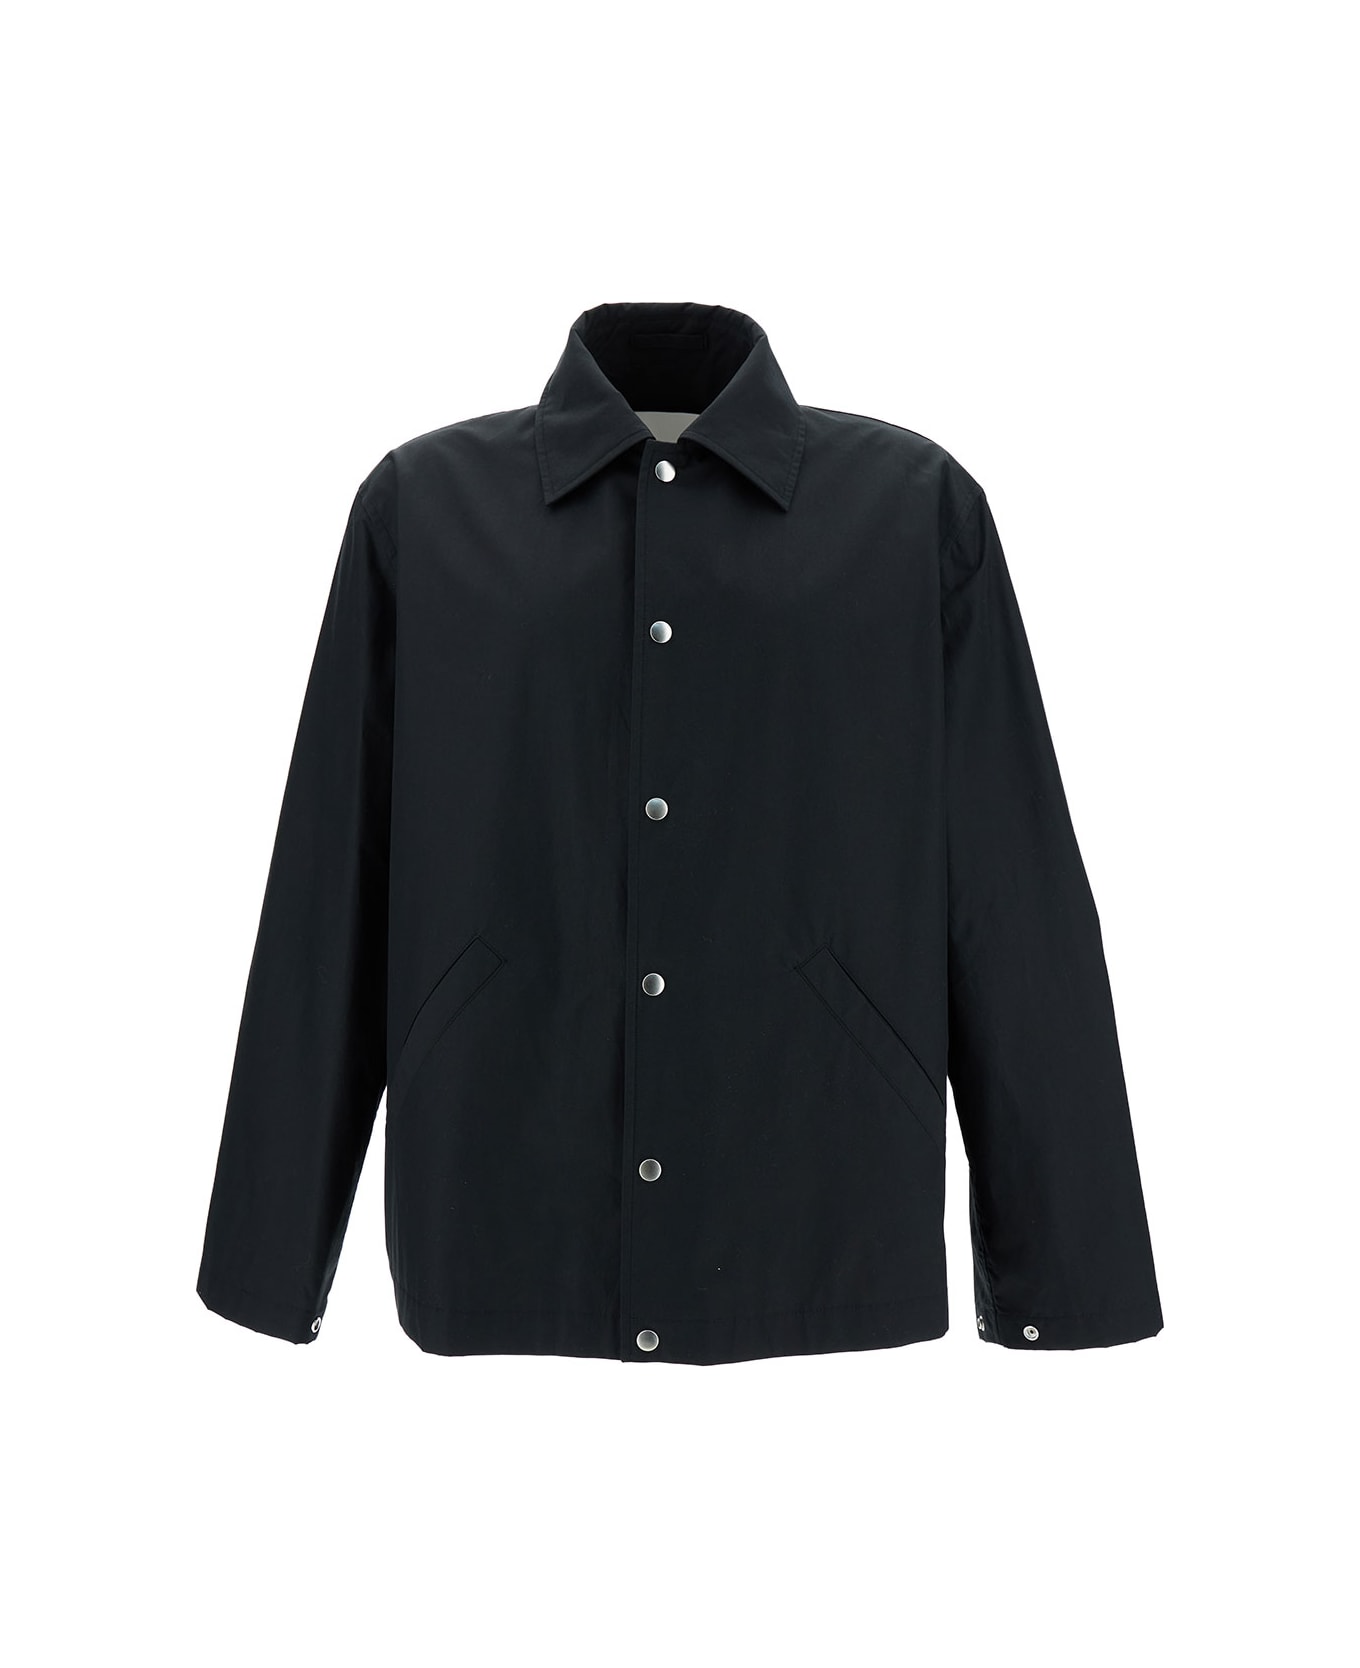 Jil Sander Black Jacket With Contrasting Logo Print At The Back In Cotton Man - Black